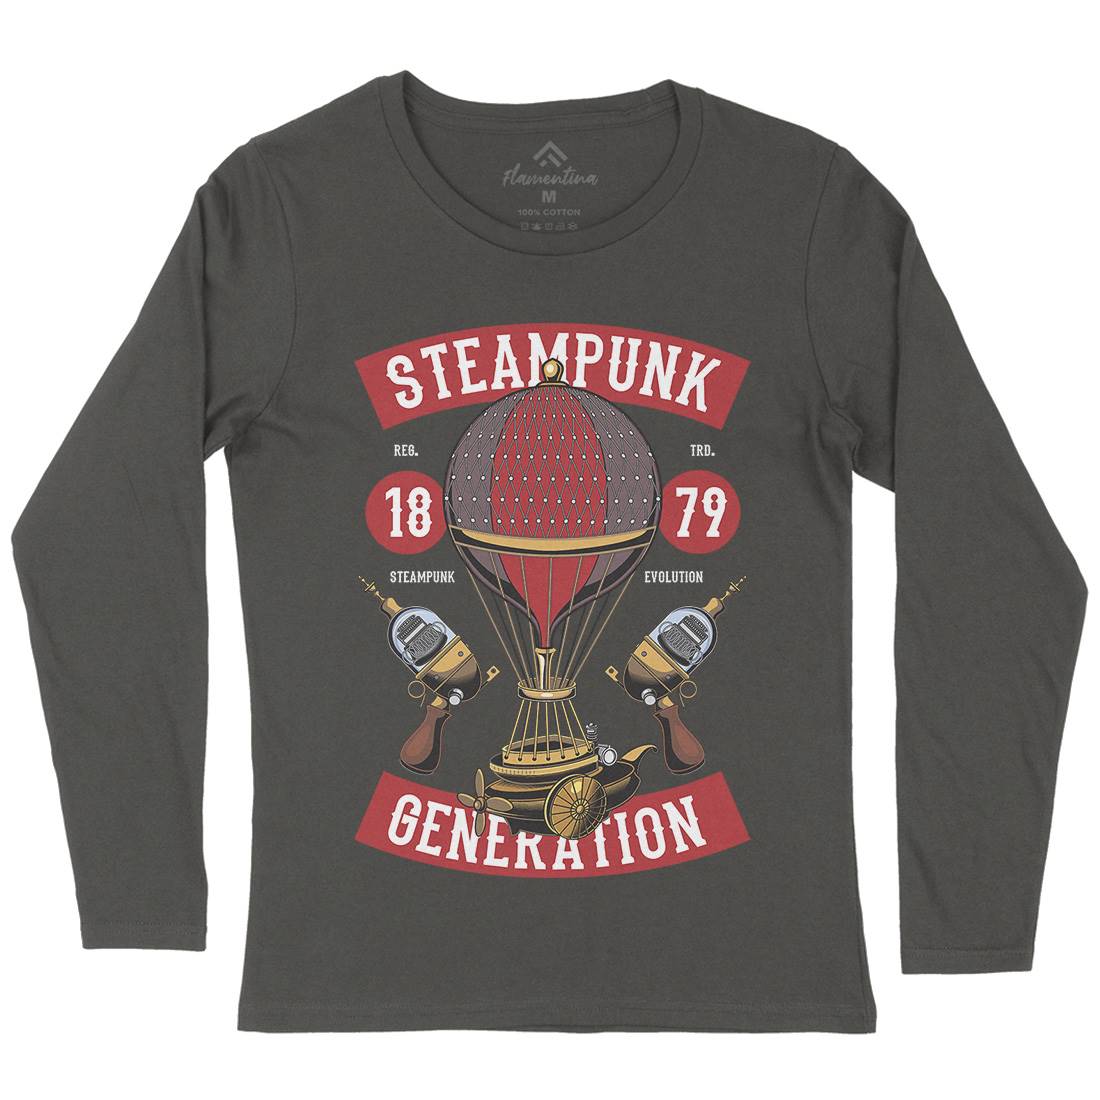 Generation Womens Long Sleeve T-Shirt Steampunk C449